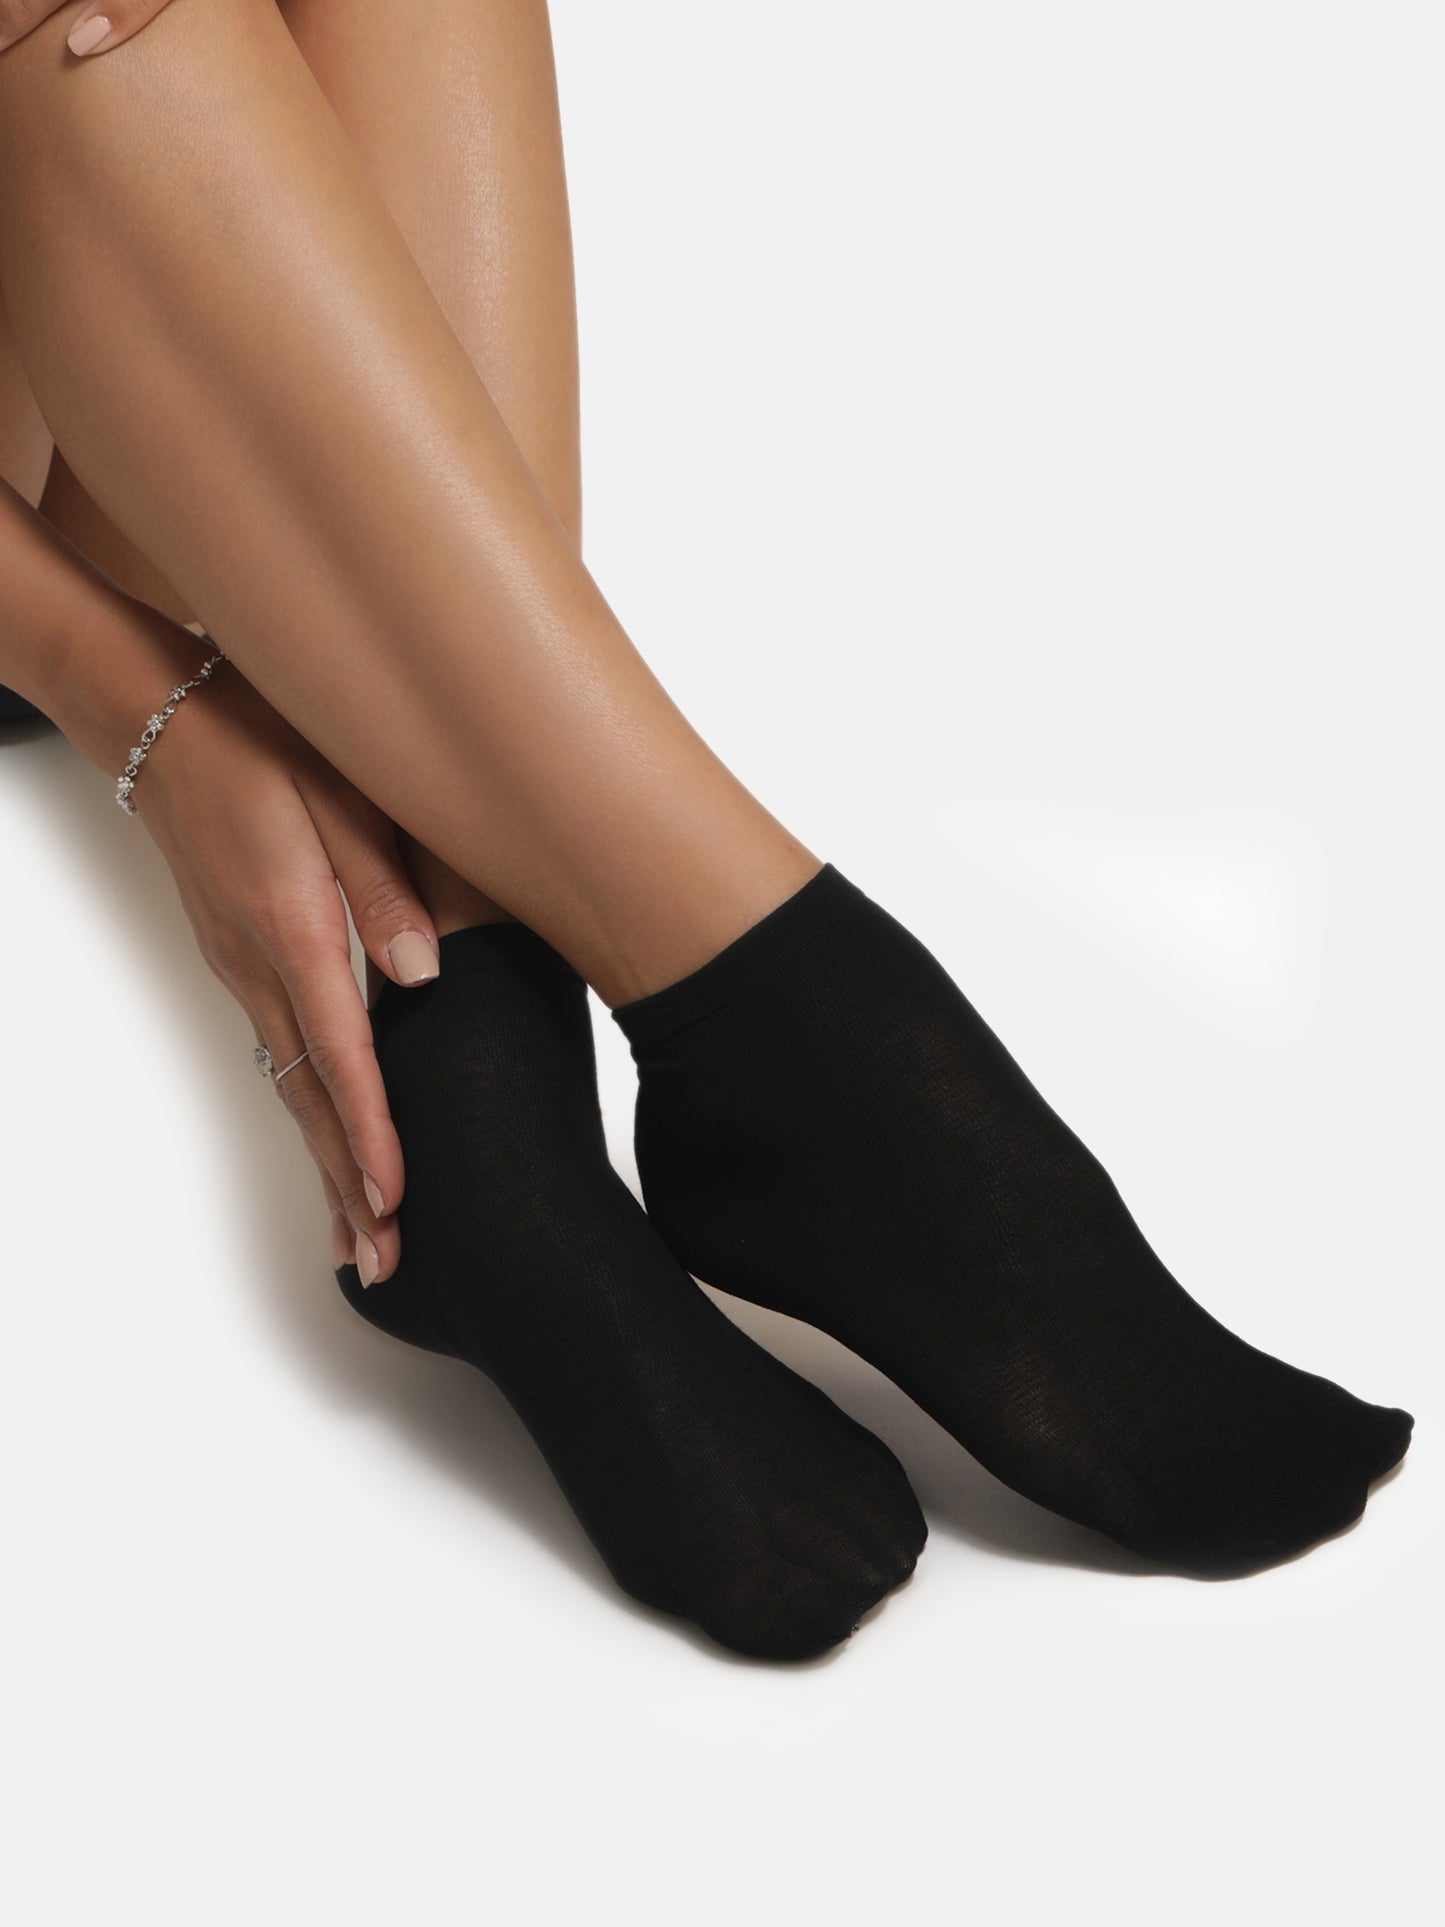 Ankle Cotton Socks- Black (Pack of 6)